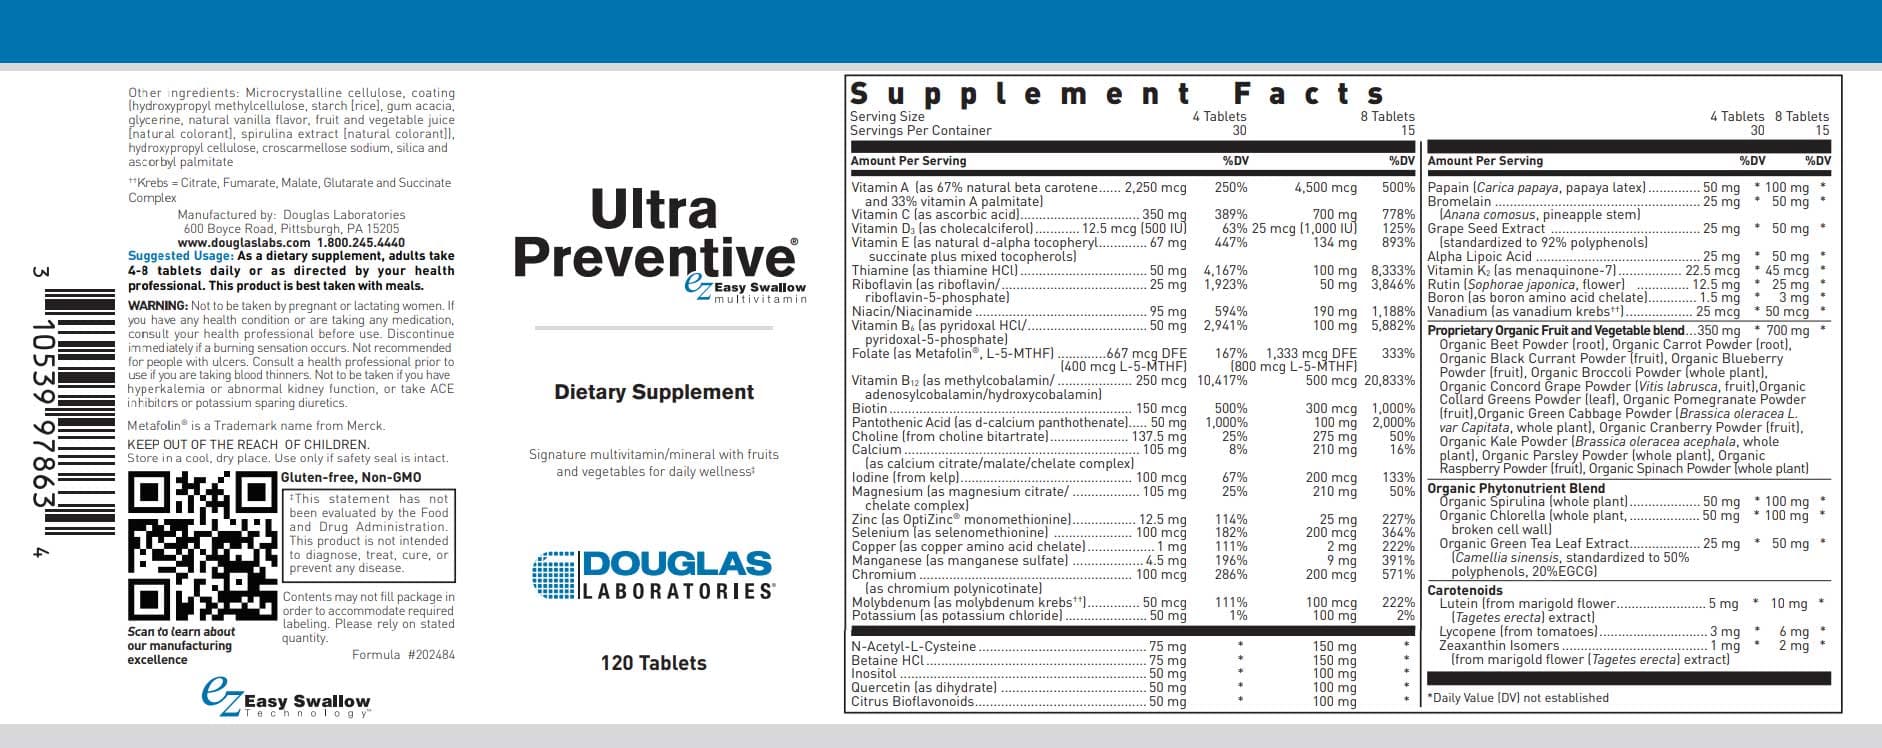 Douglas Laboratories Ultra Preventive -EZ Swallow Label